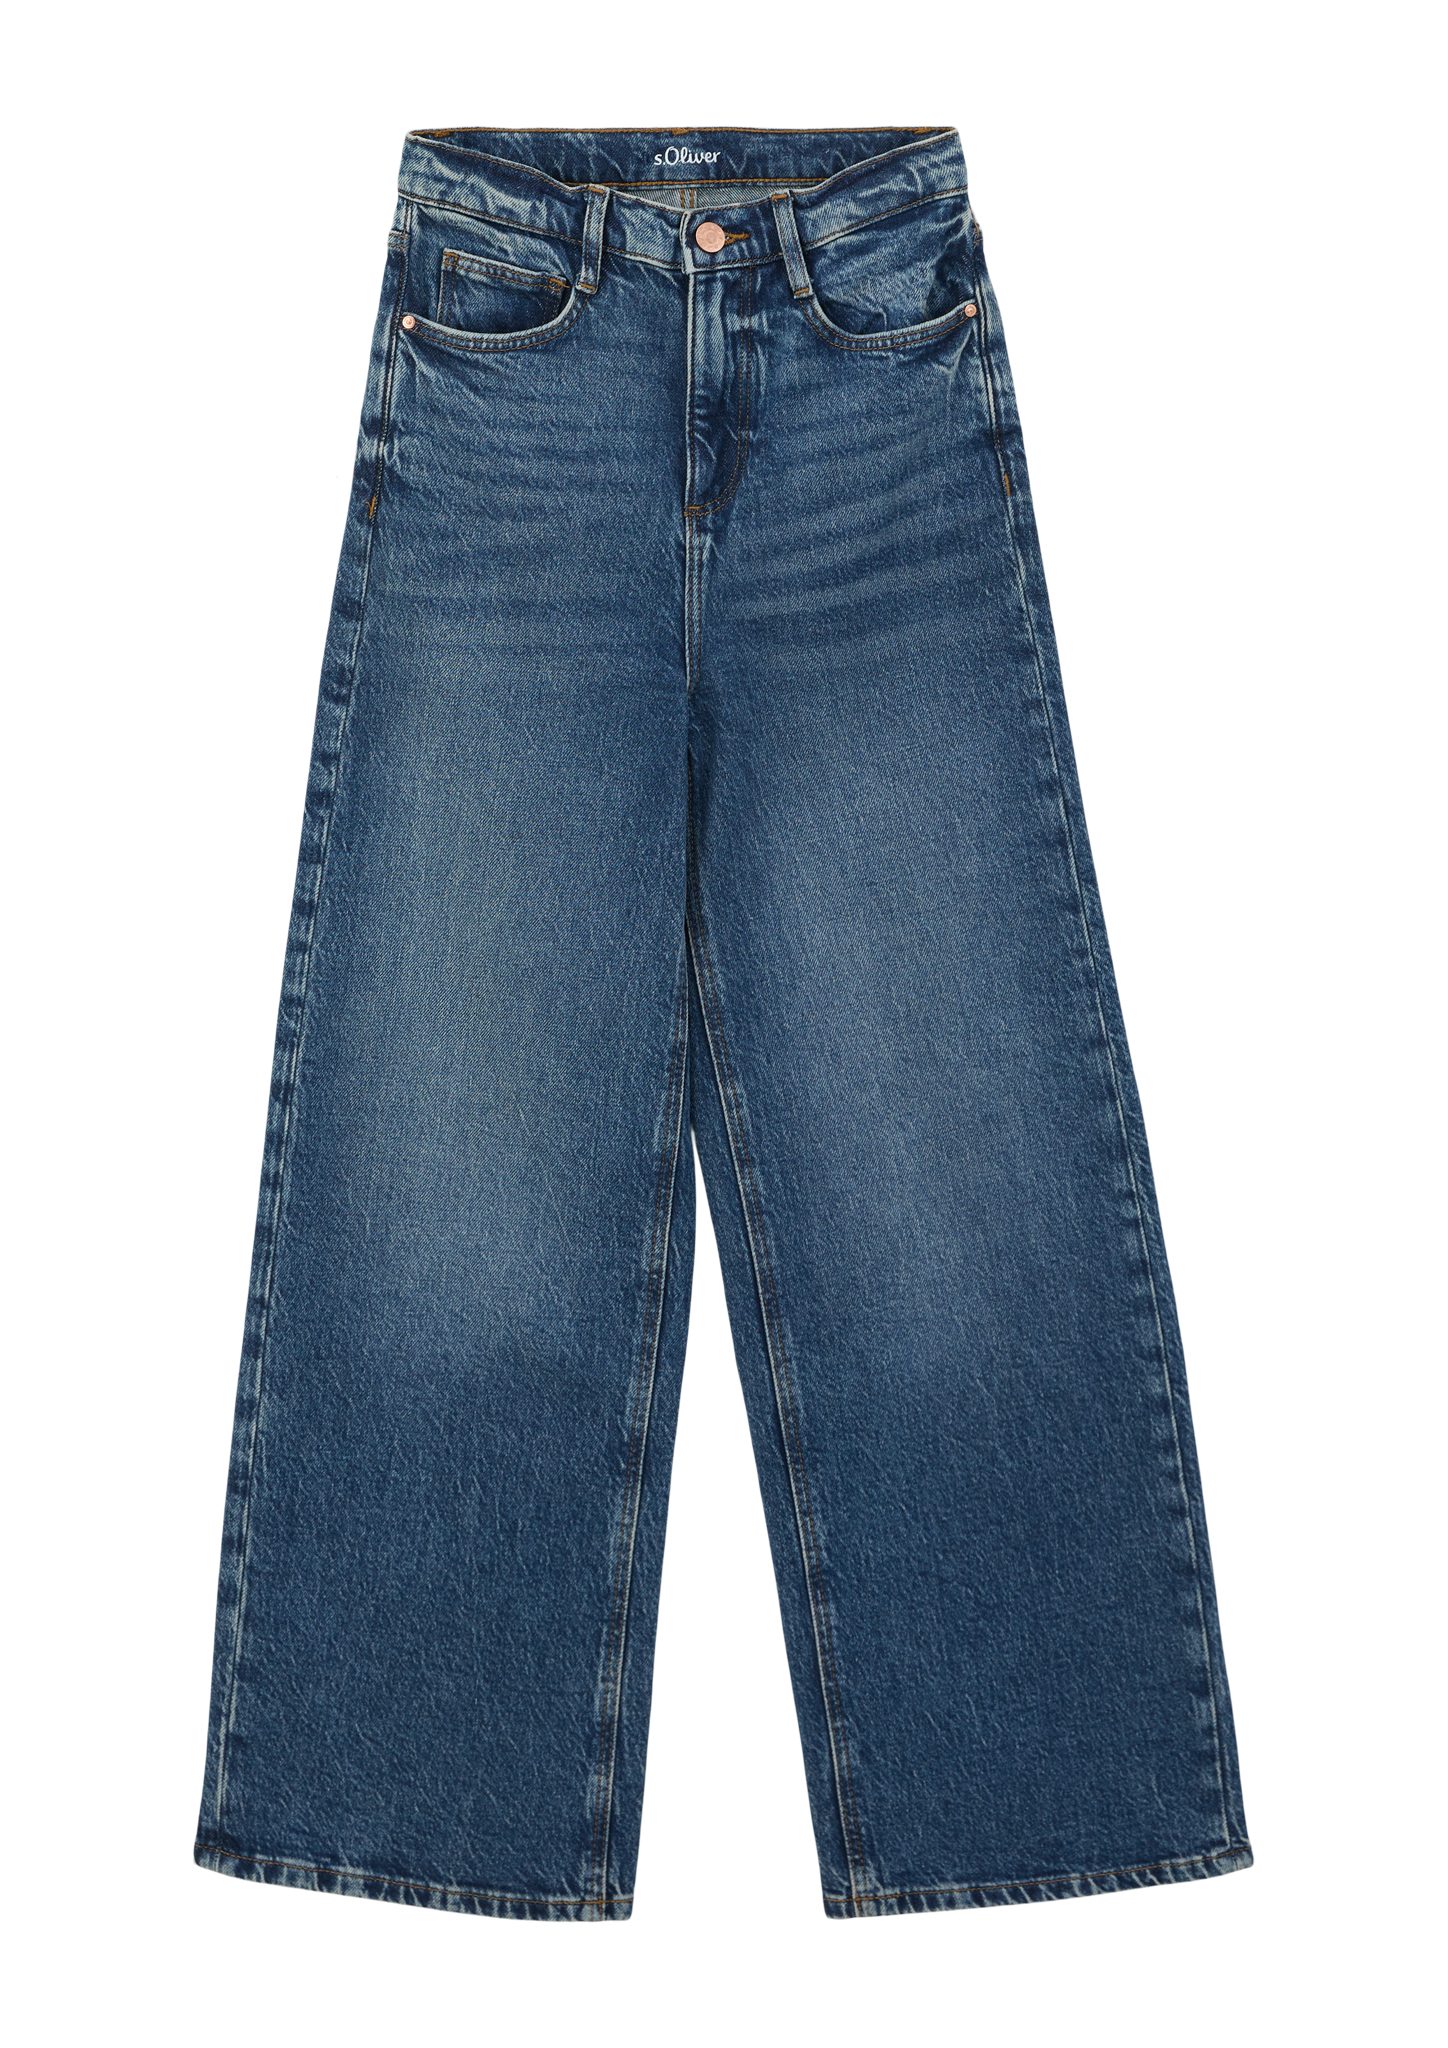 Stoffhose Regular Wide / High s.Oliver Jeans / Waschung Fit Super / Rise Leg